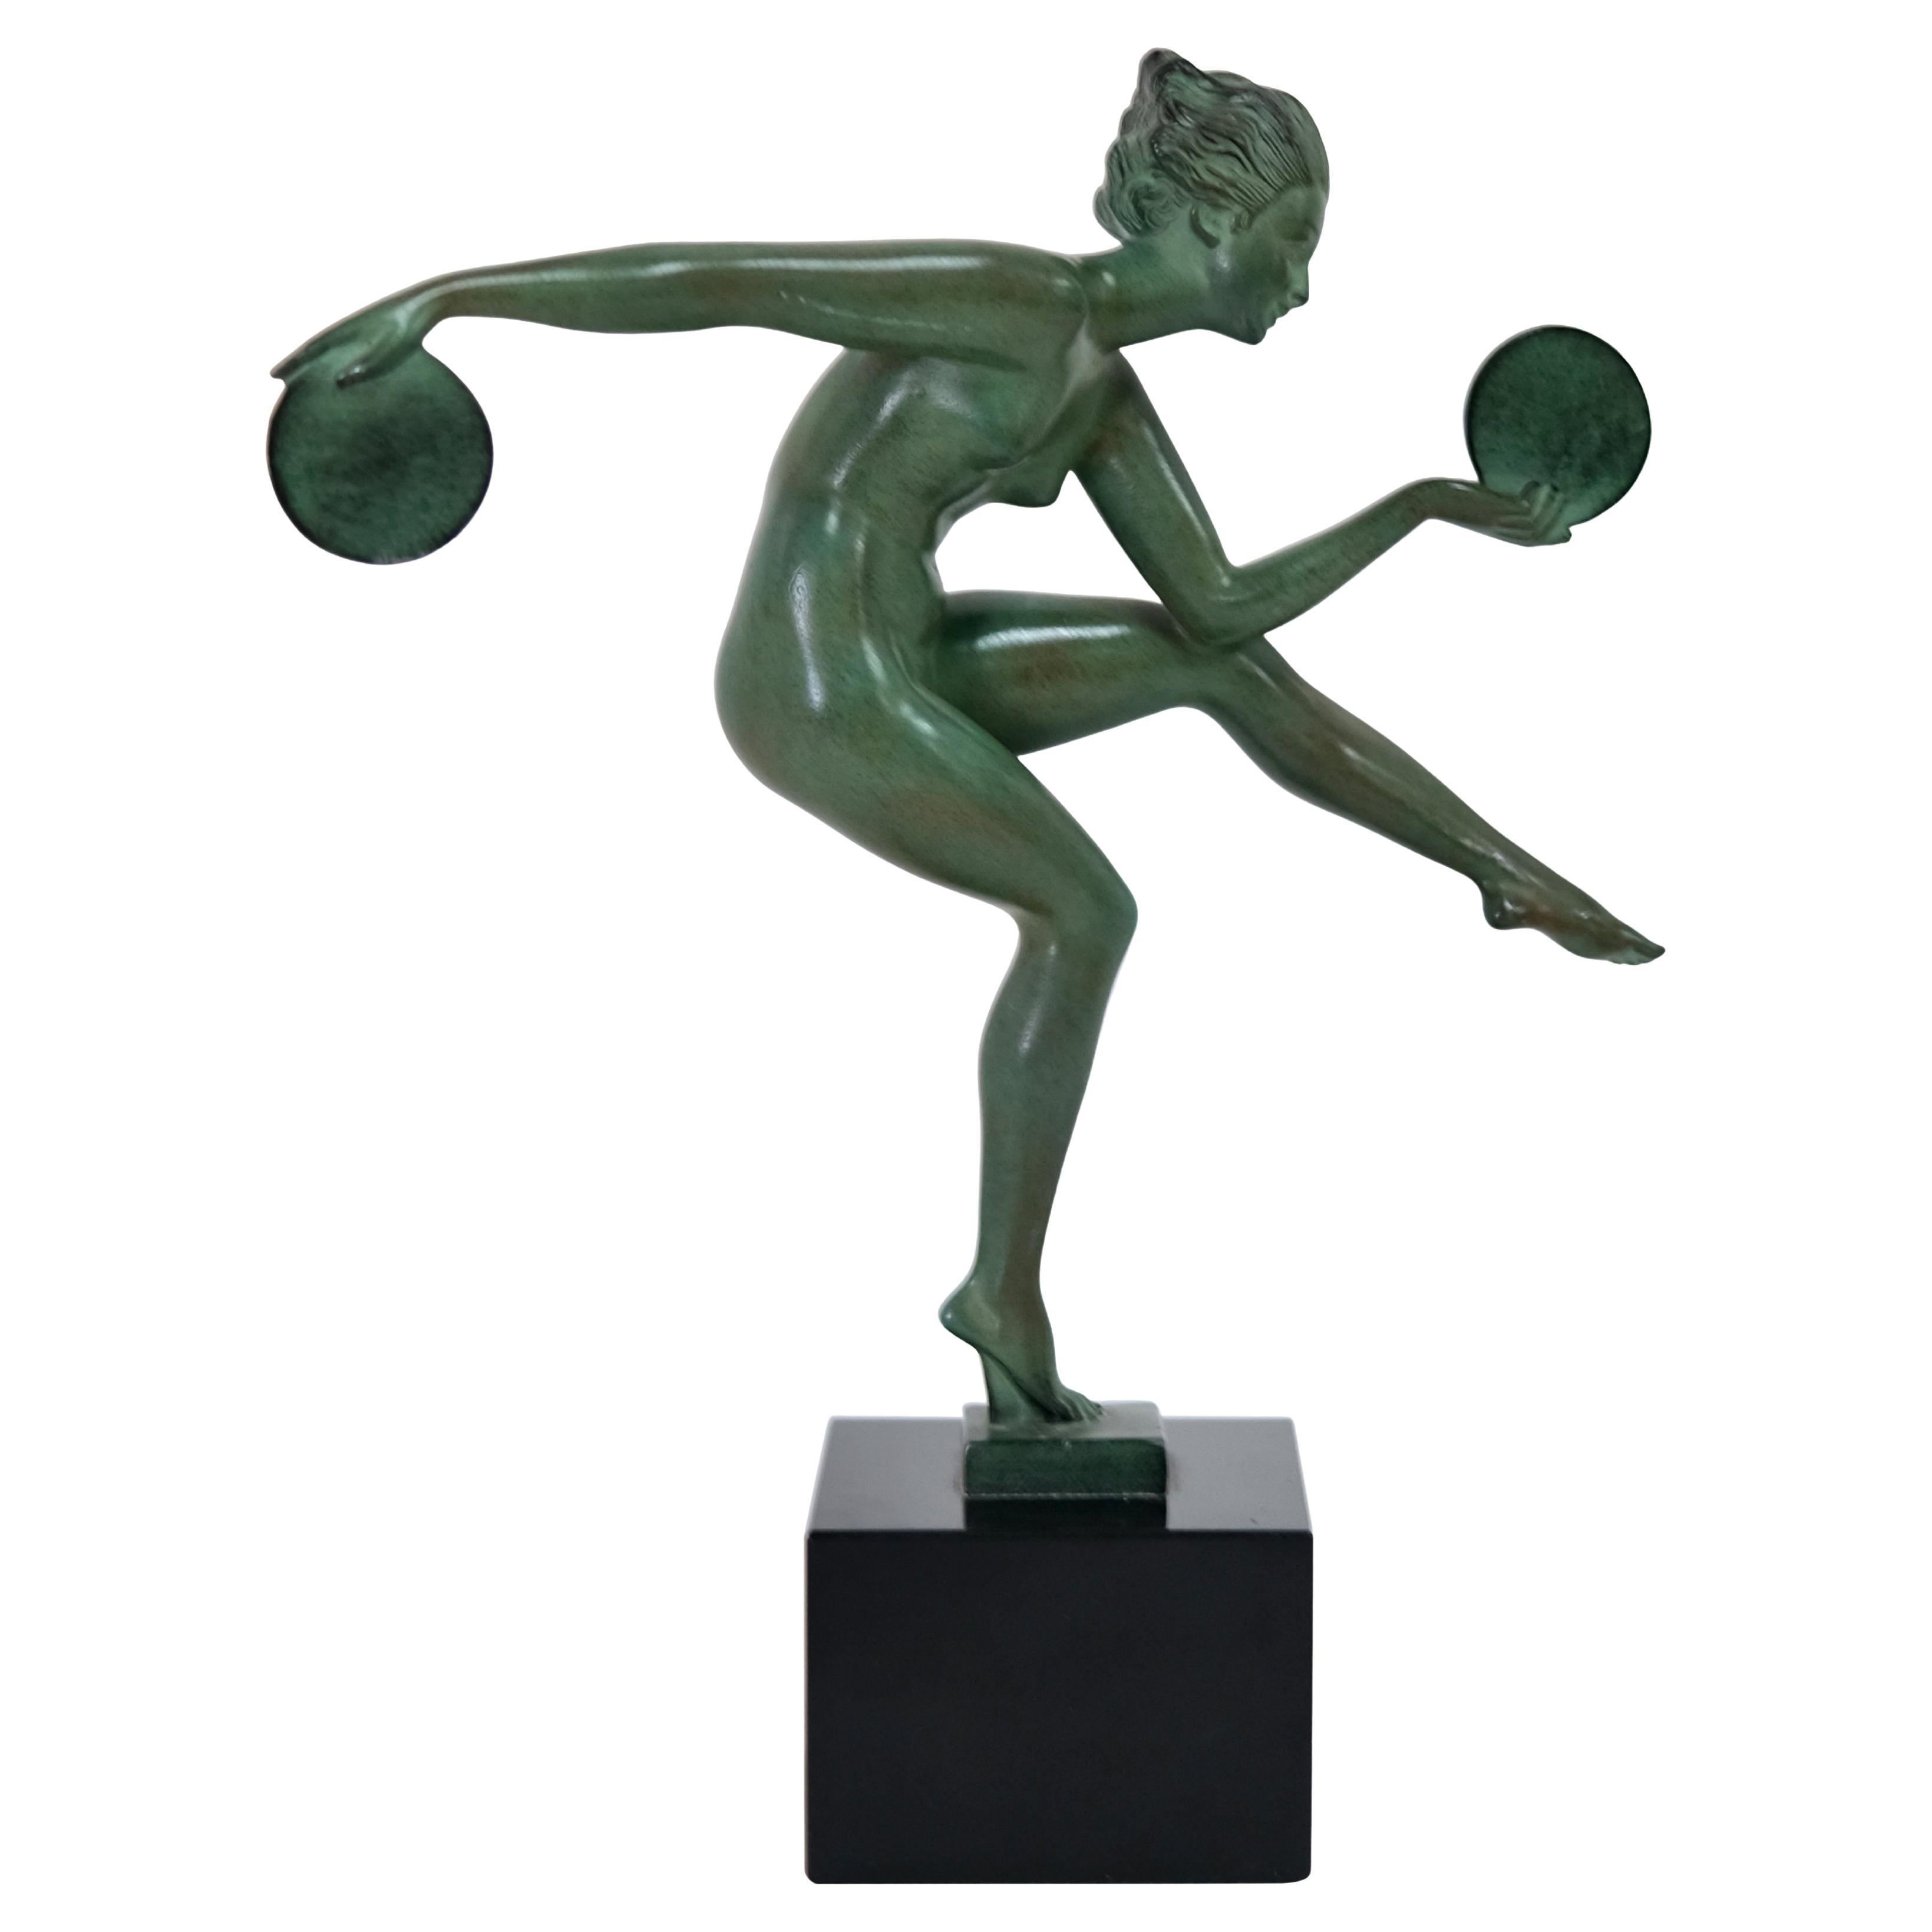 French Art Deco Dancer Sculpture by Alexandre-Joseph Derenne for Max Le Verrier